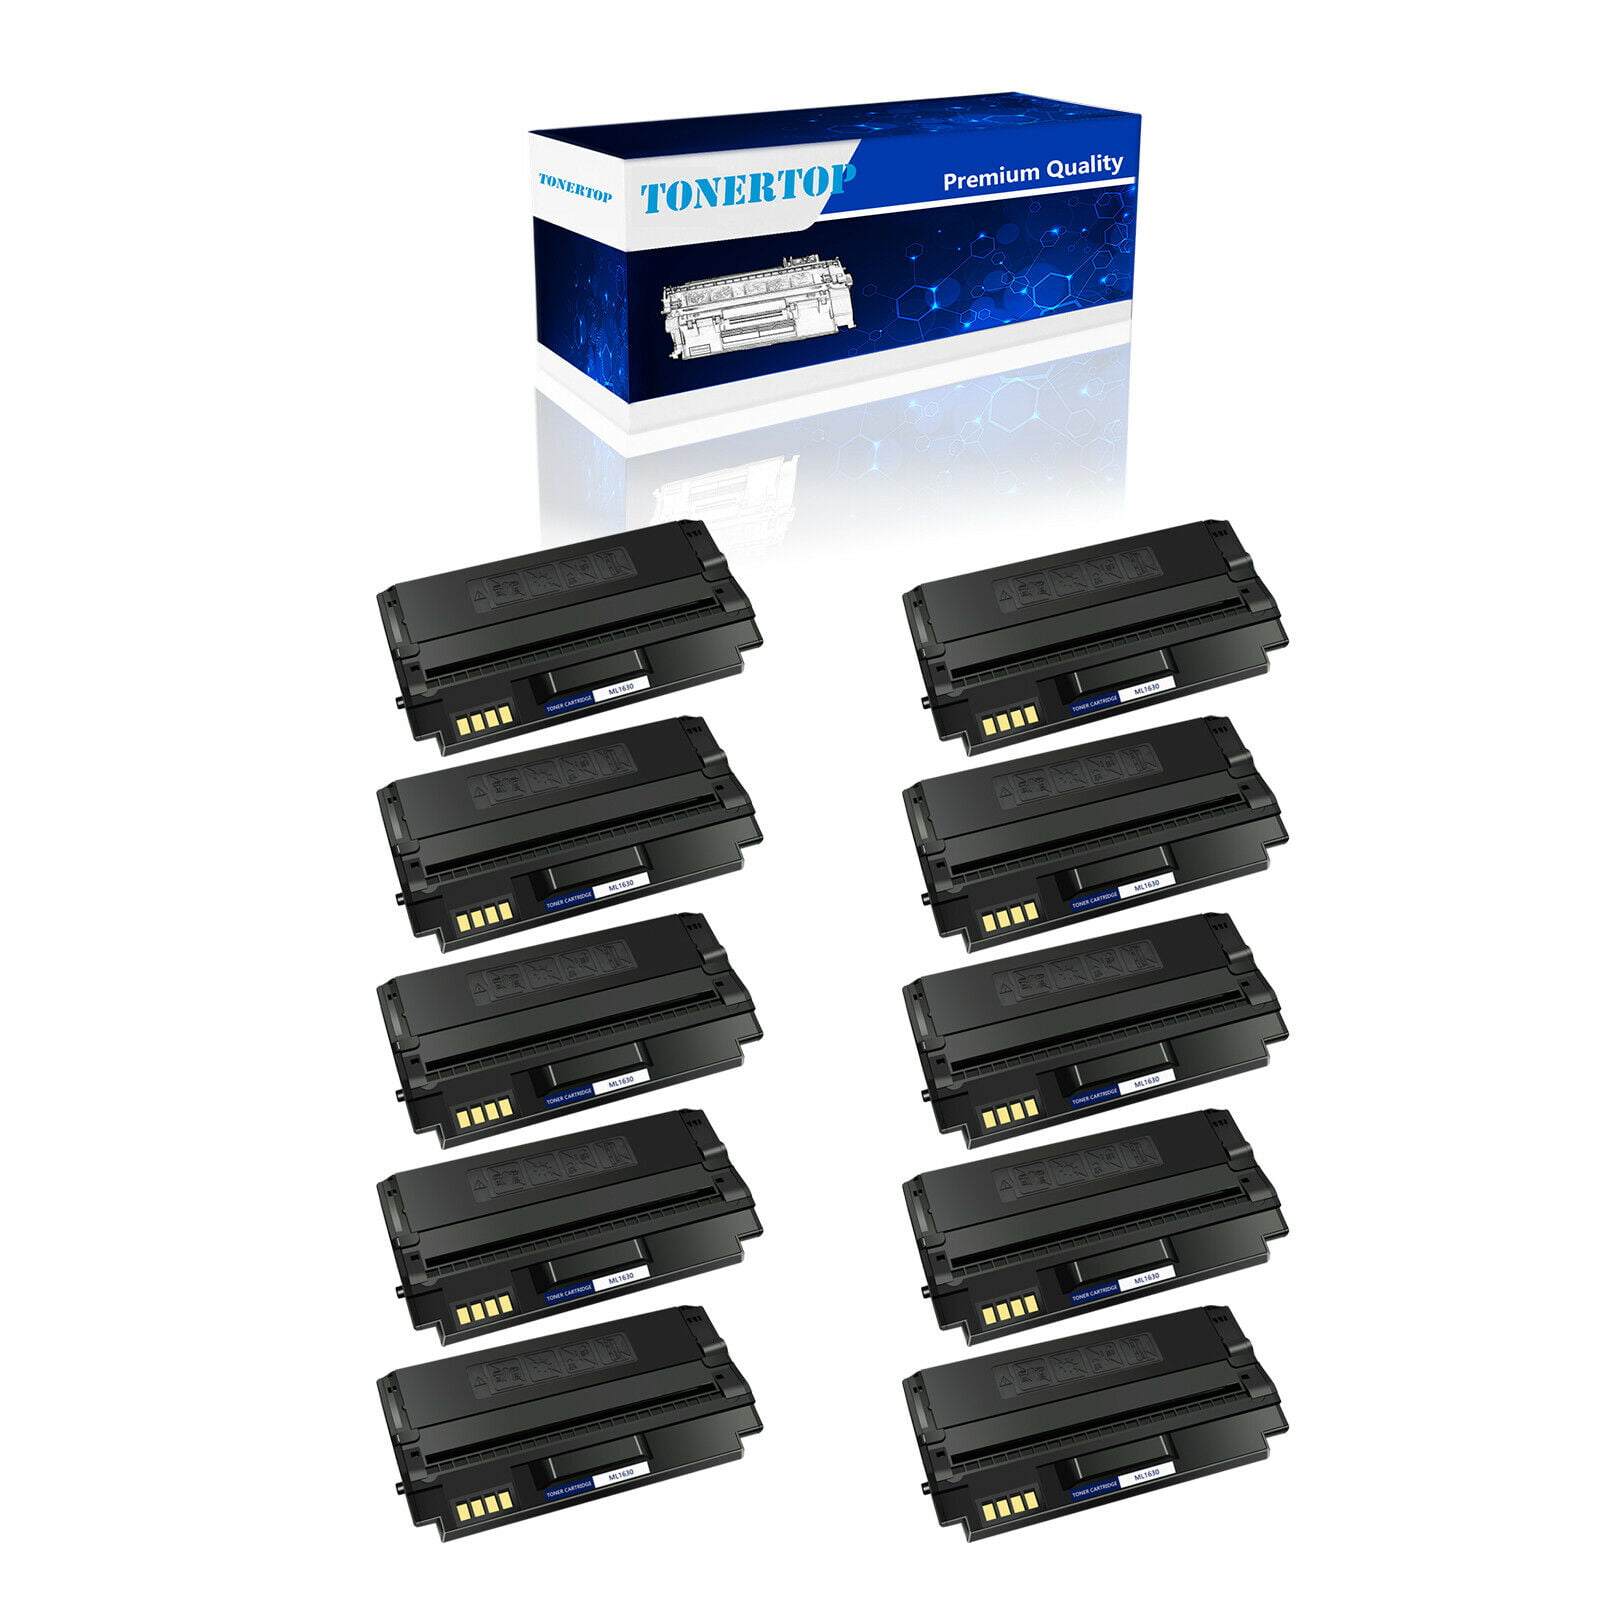 2PK ML1630 Black Toner Cartridge For Samsung ML-1630 ML-1630W SCX-4500 SCX-4500W 